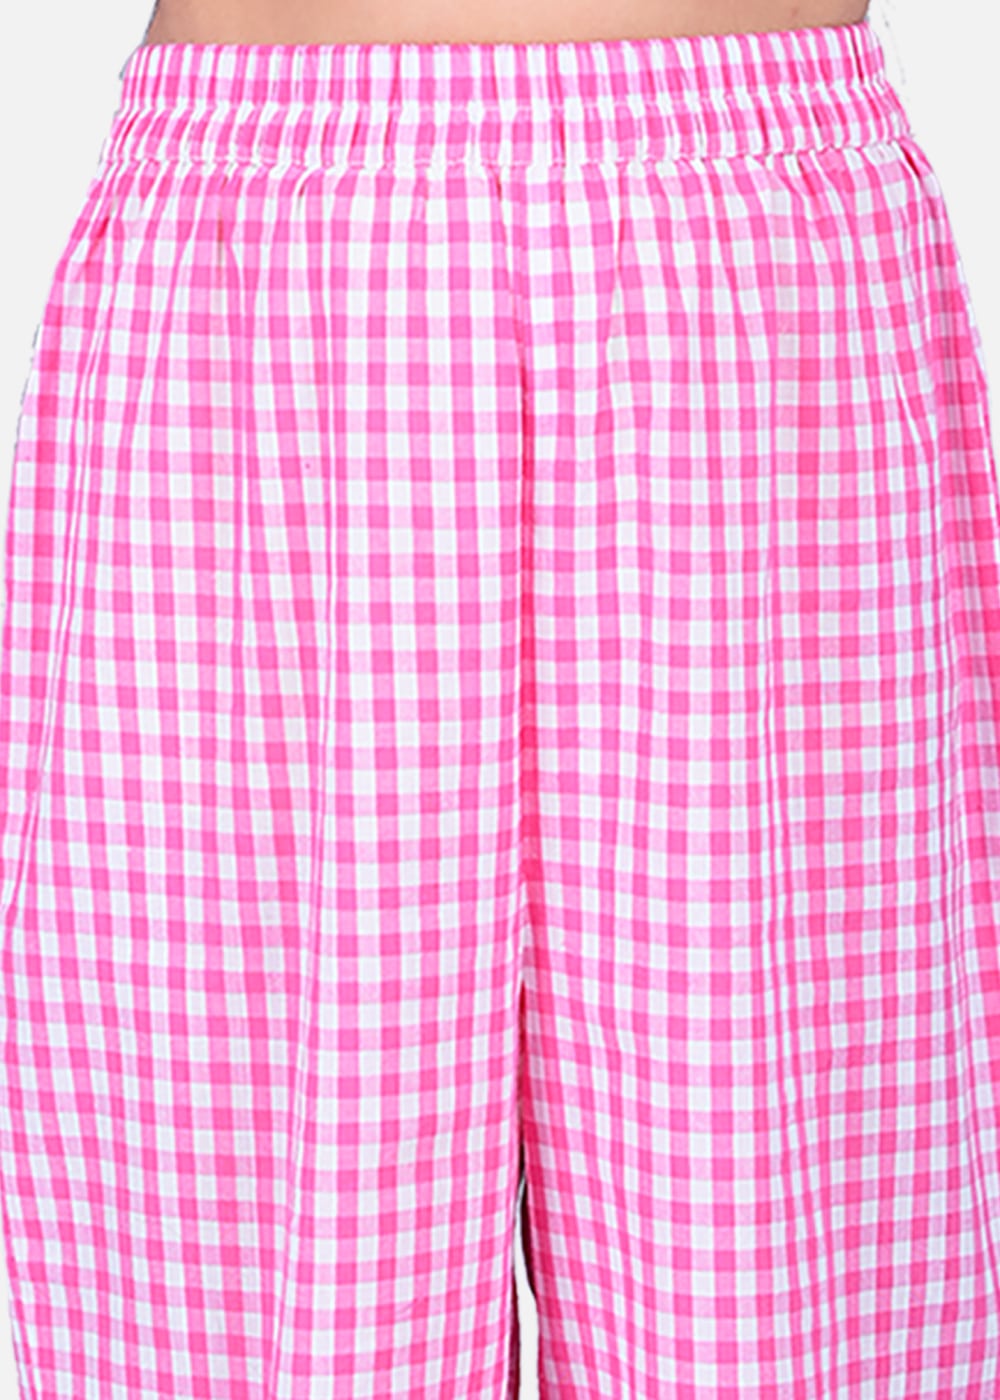 Pink Shoulder Frill Checkered Nightwear